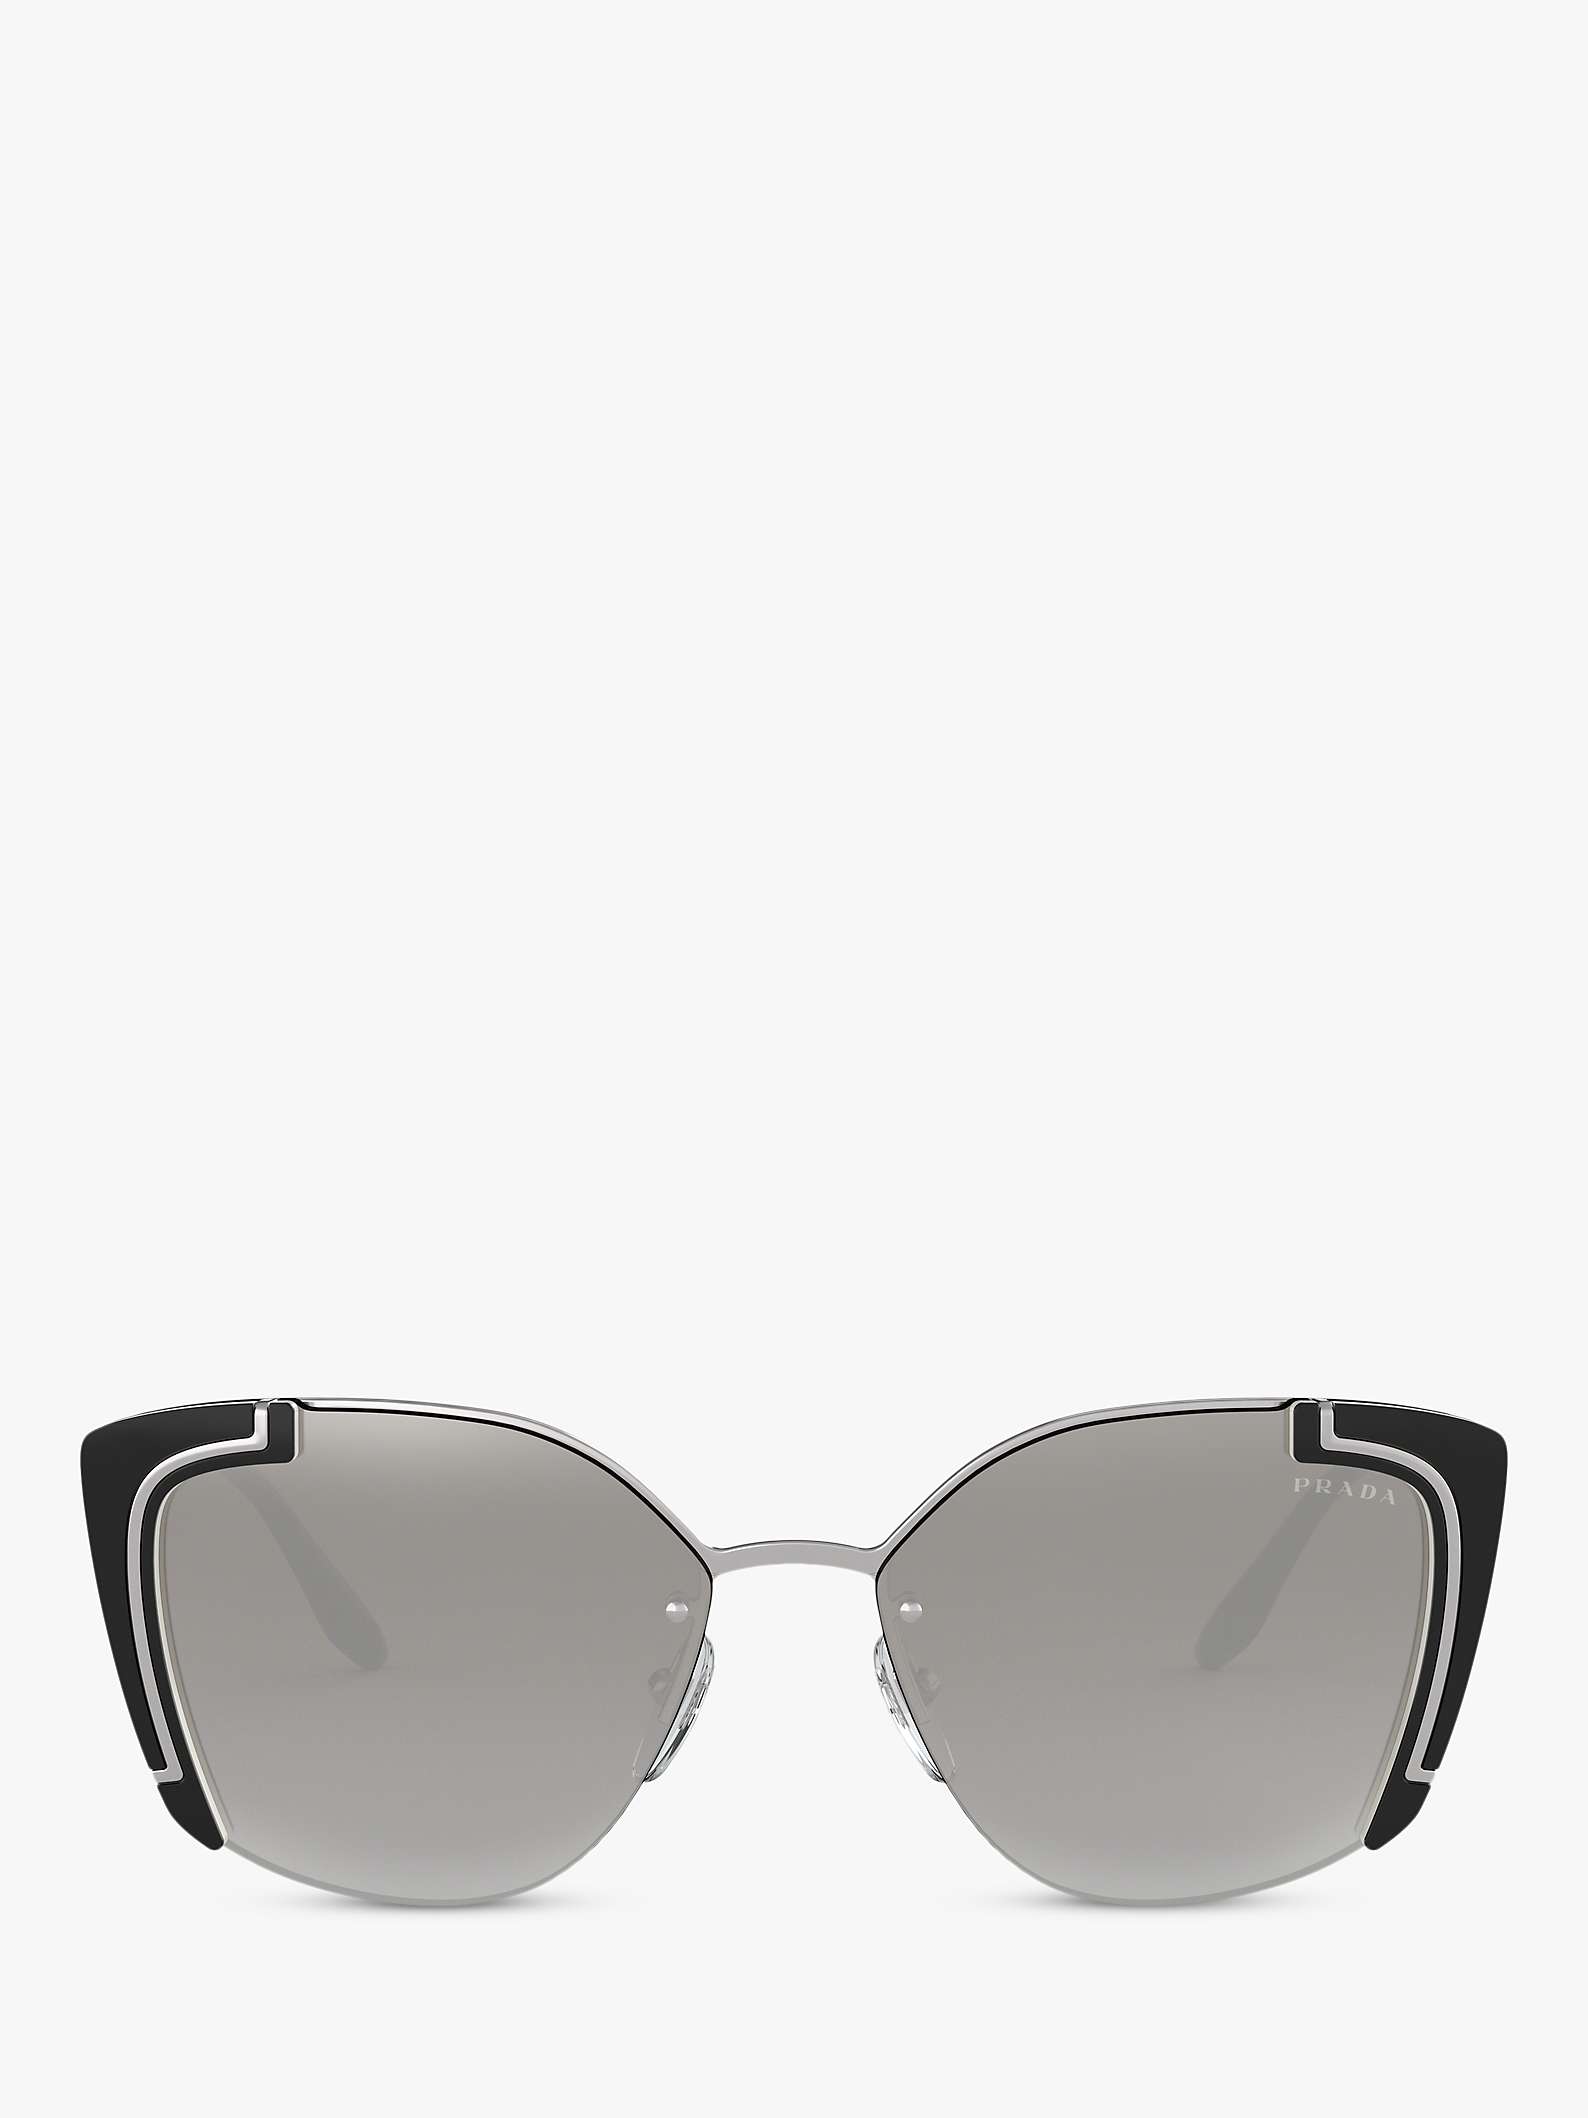 Buy Prada PR 59VS Women's Square Sunglasses, Silver/Mirror Grey Online at johnlewis.com